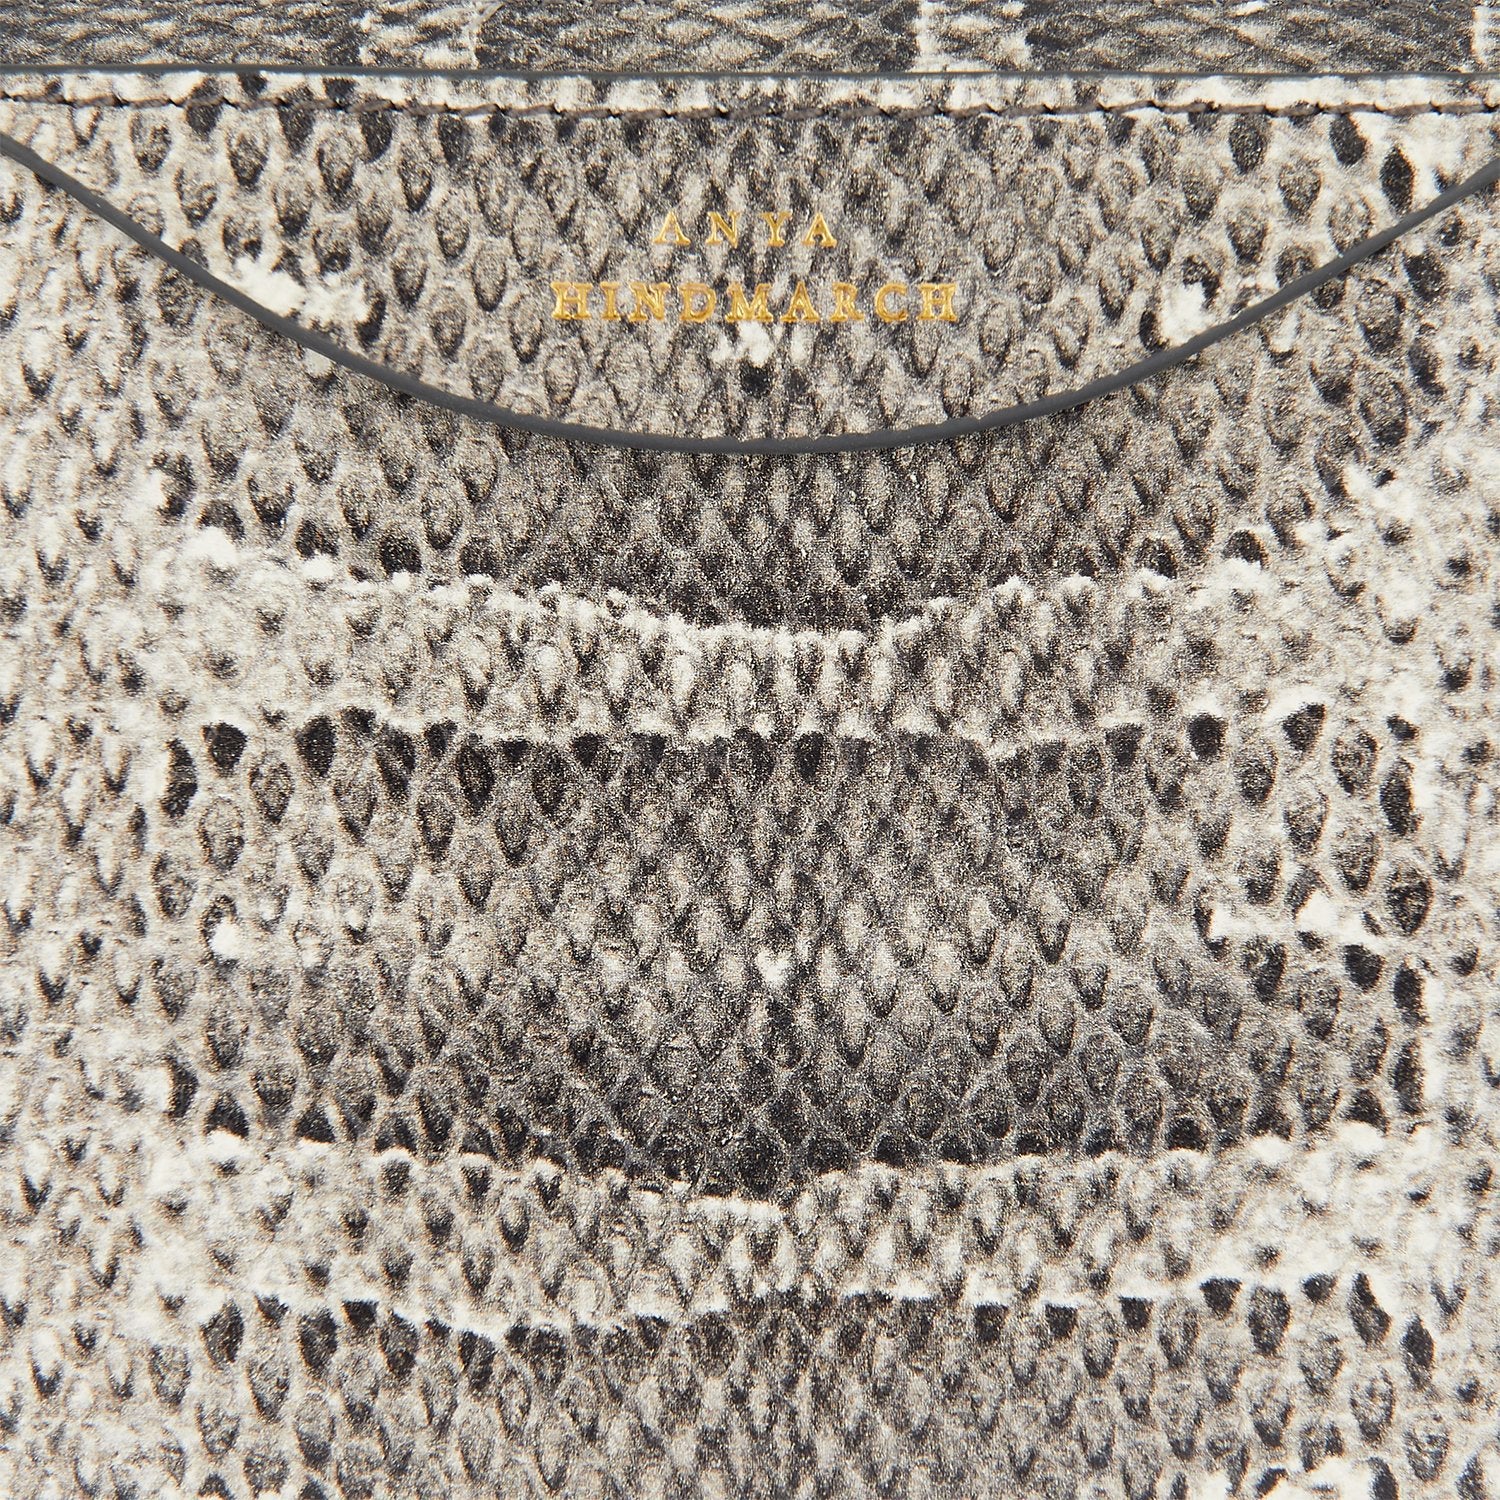 Double Zip Cross-body -

                  
                    Croc-Effect Calf Leather in Olive -
                  

                  Anya Hindmarch EU
